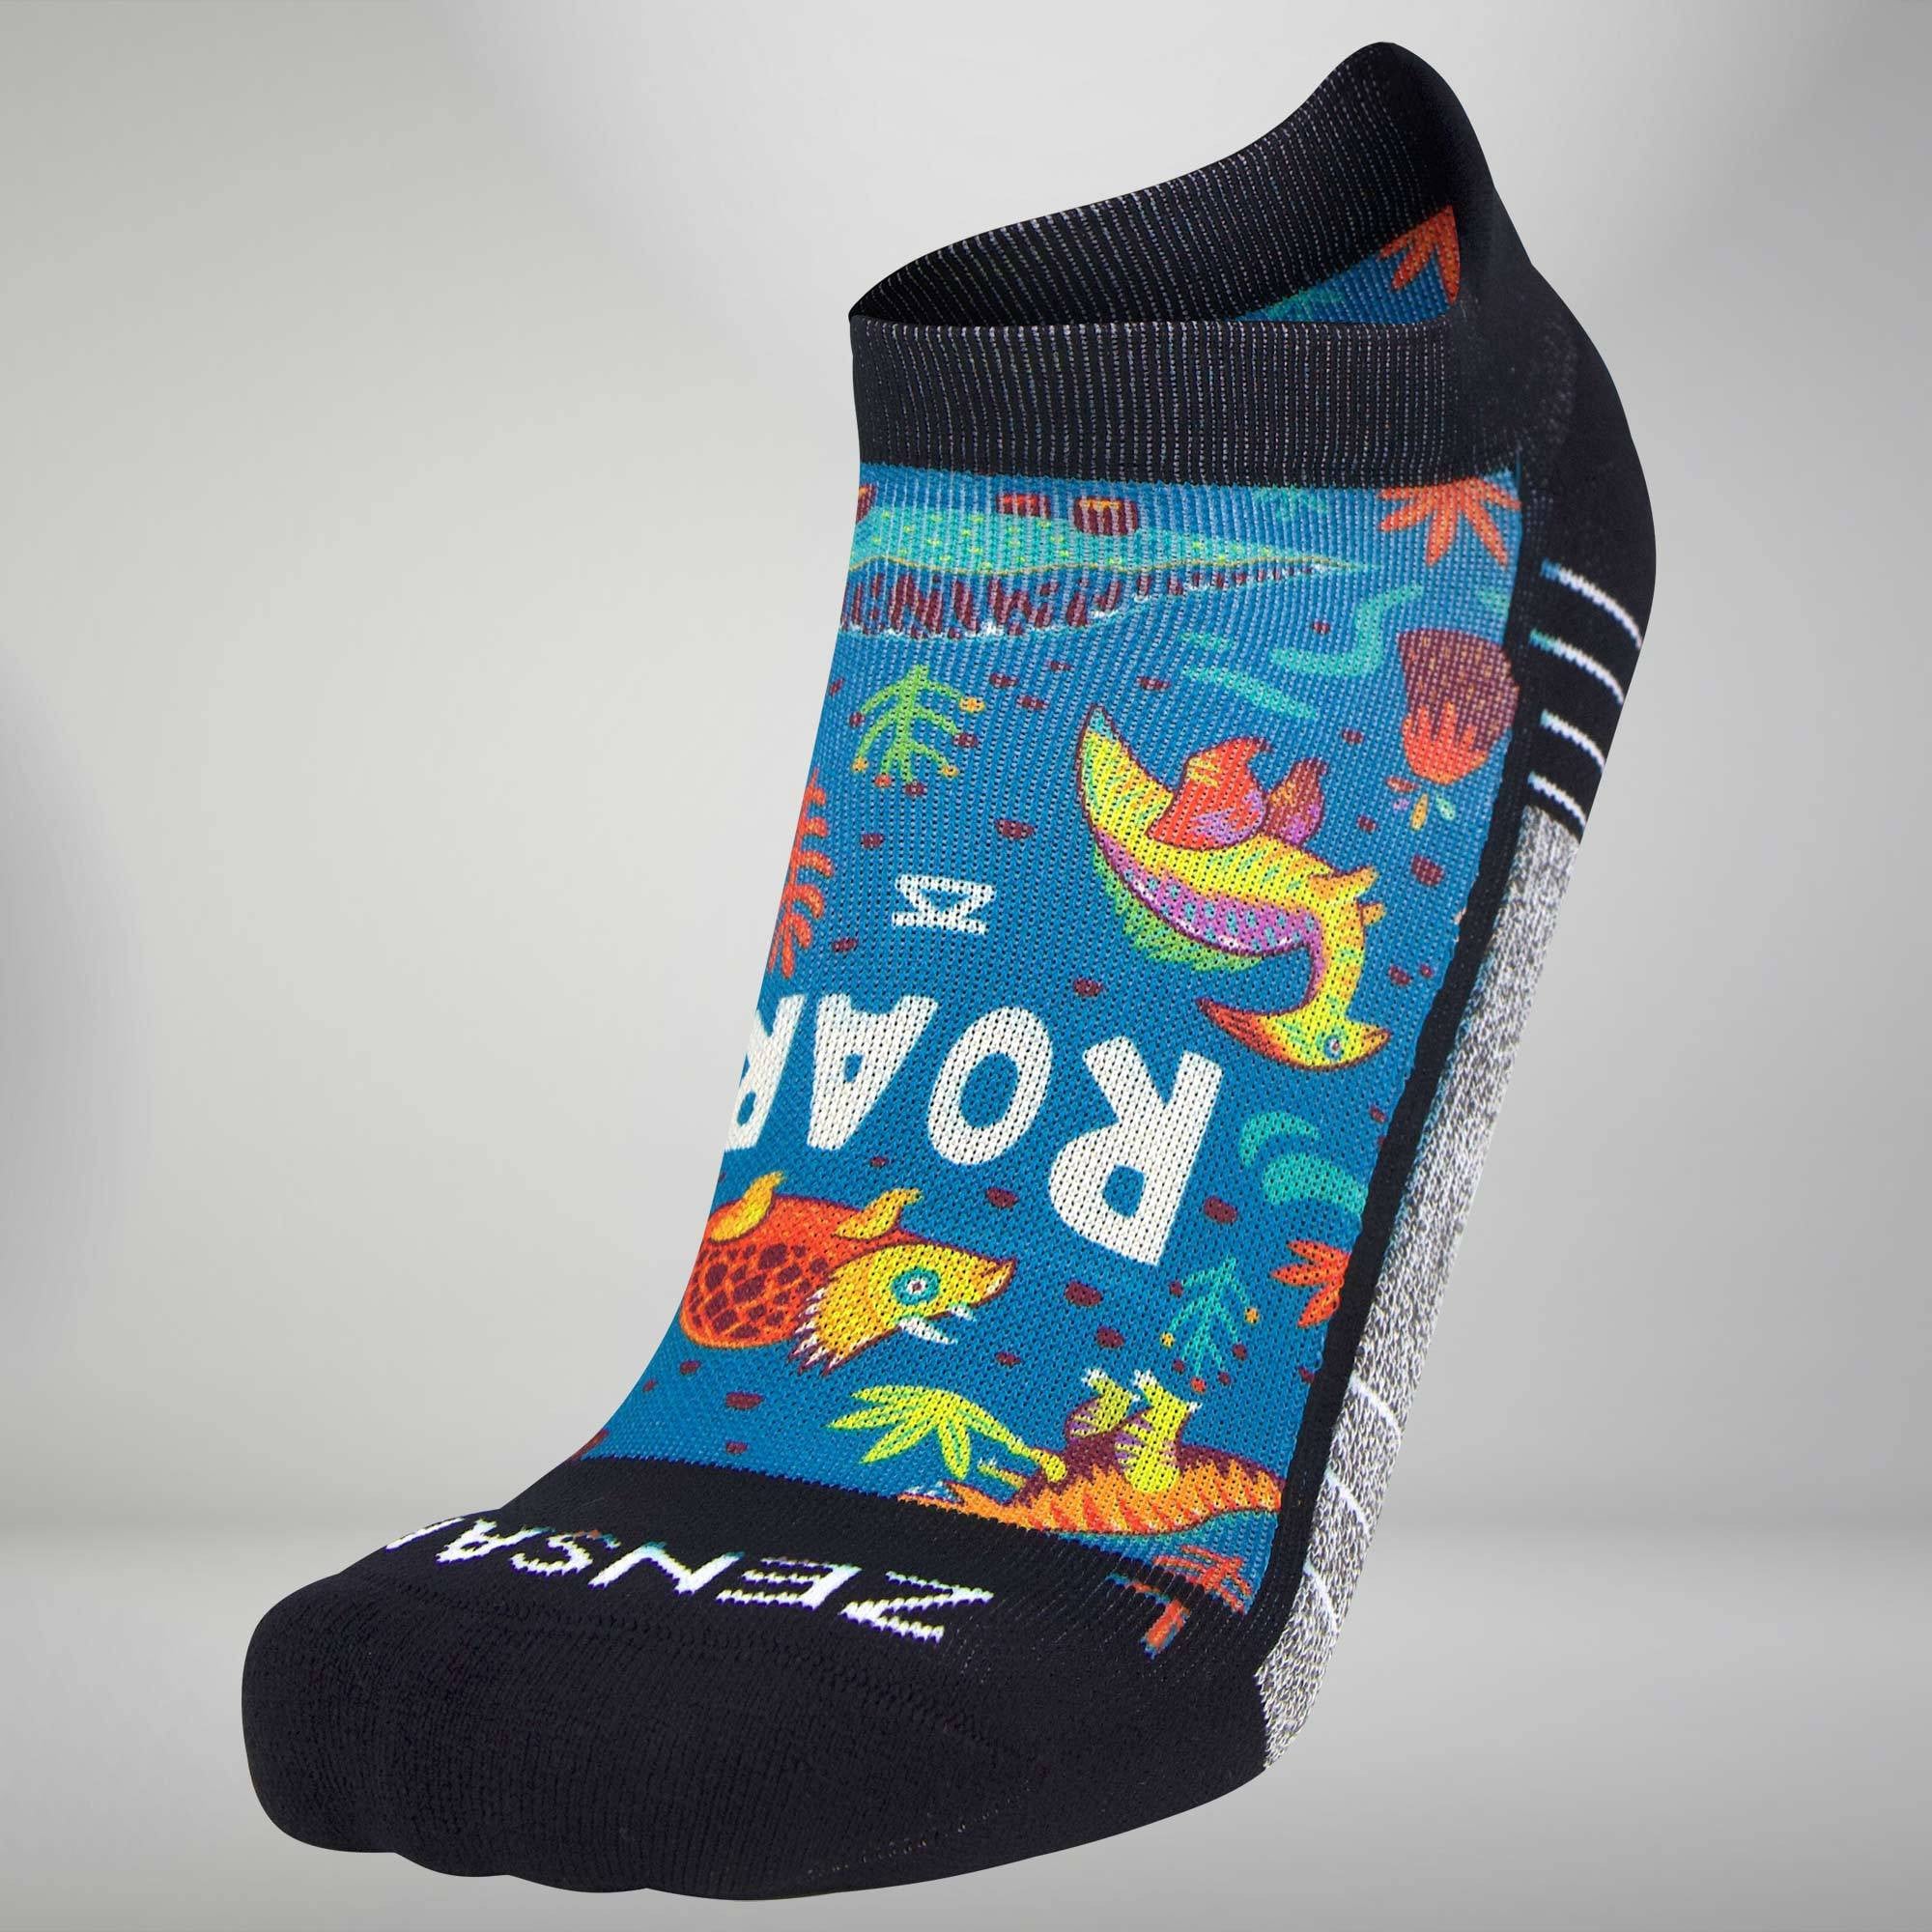 Dinosaurs Socks (No Show)Socks - Zensah